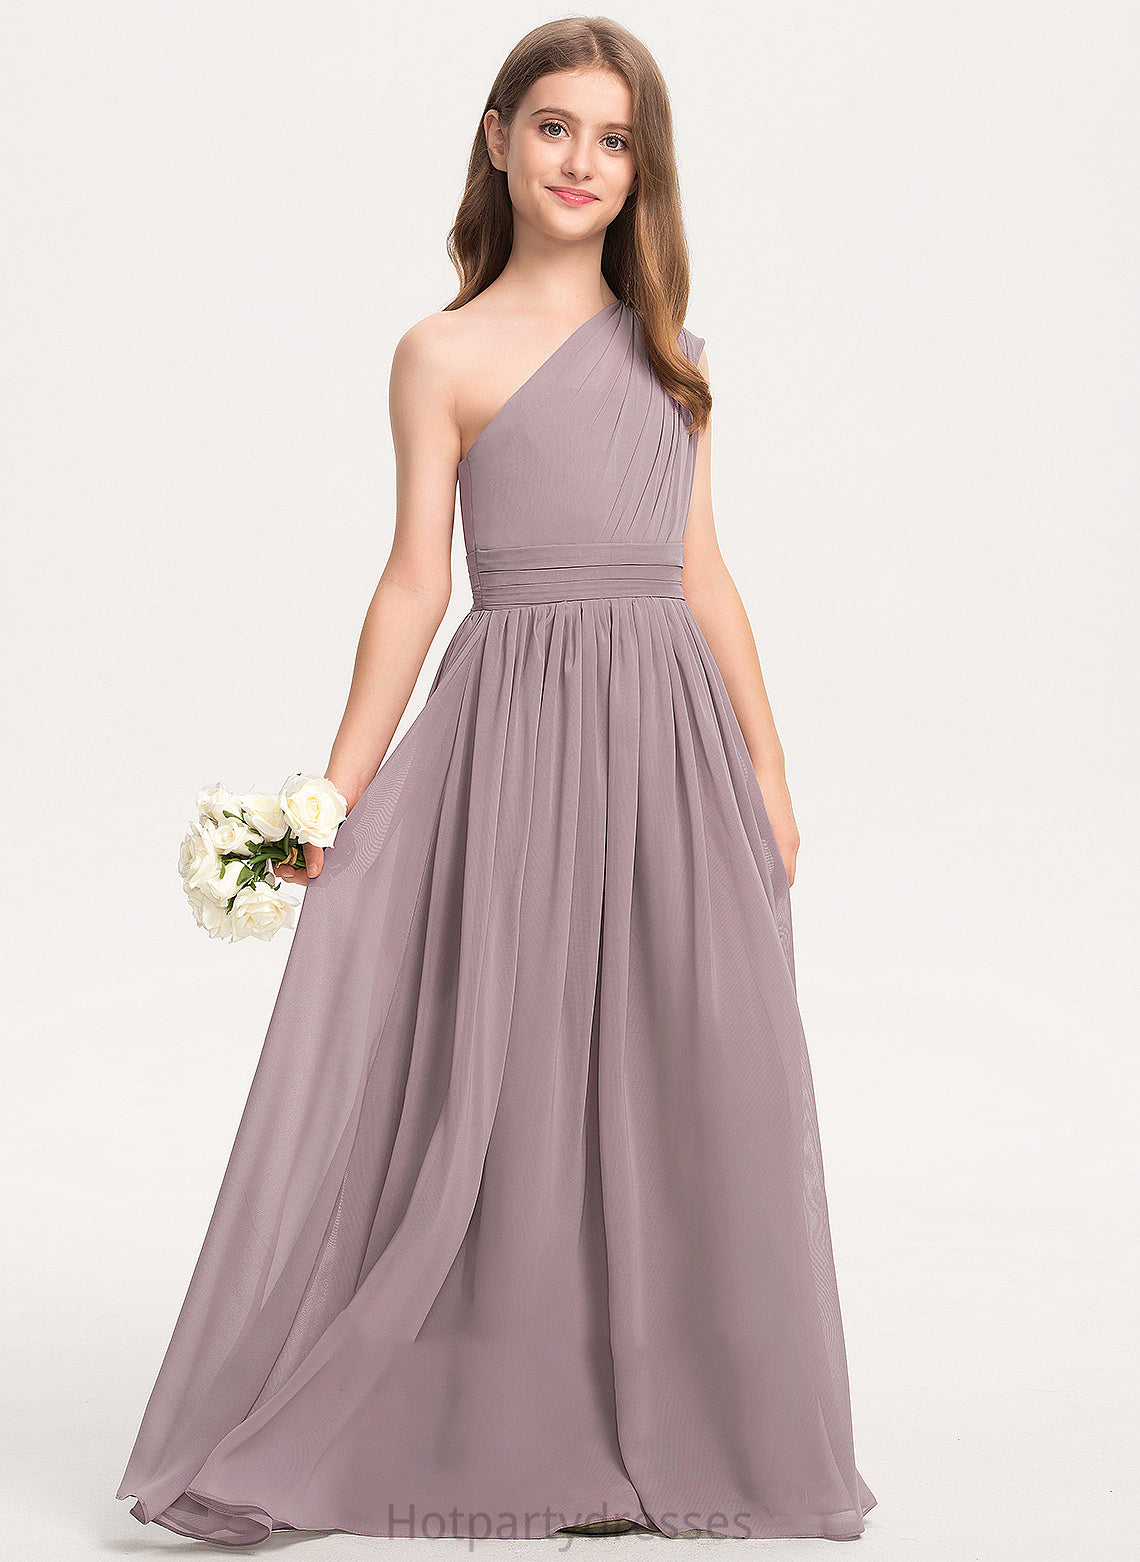 Annabella Chiffon A-Line Junior Bridesmaid Dresses One-Shoulder Floor-Length With Ruffle